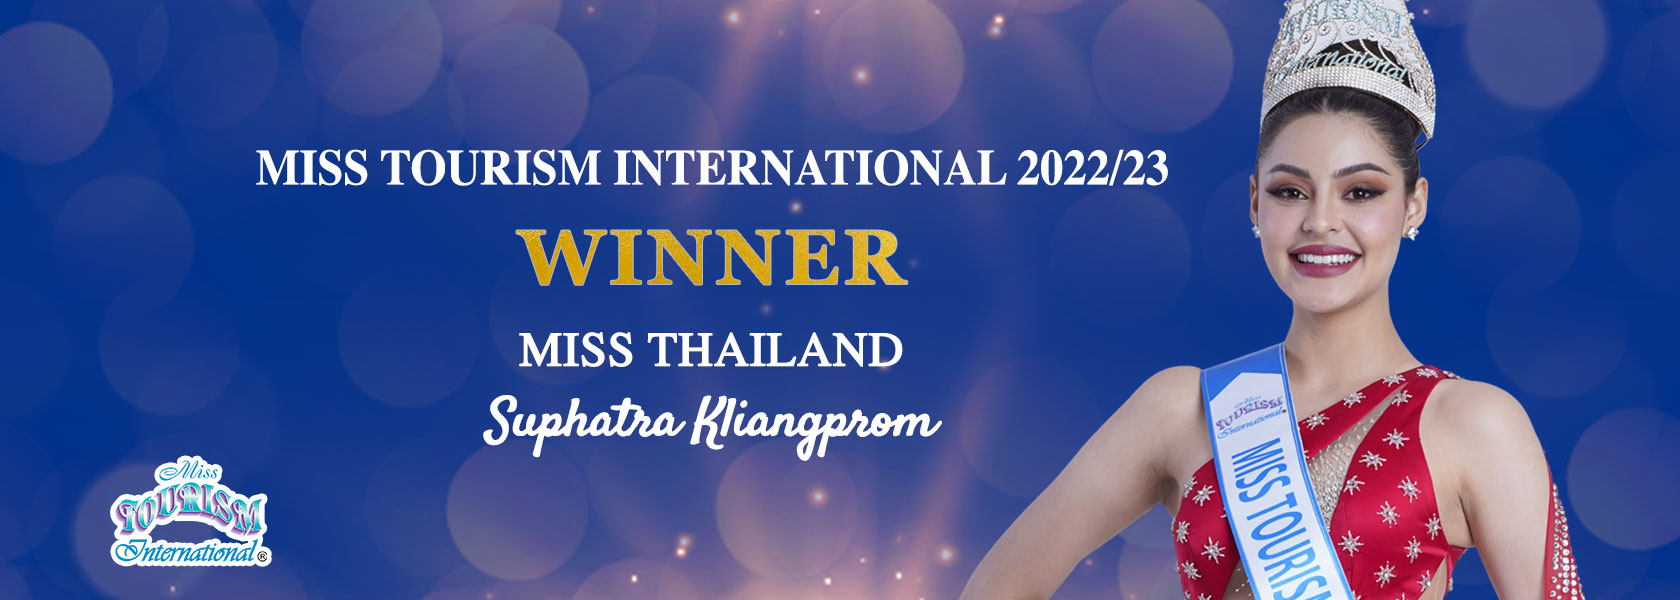 miss tourism international 2022 winner